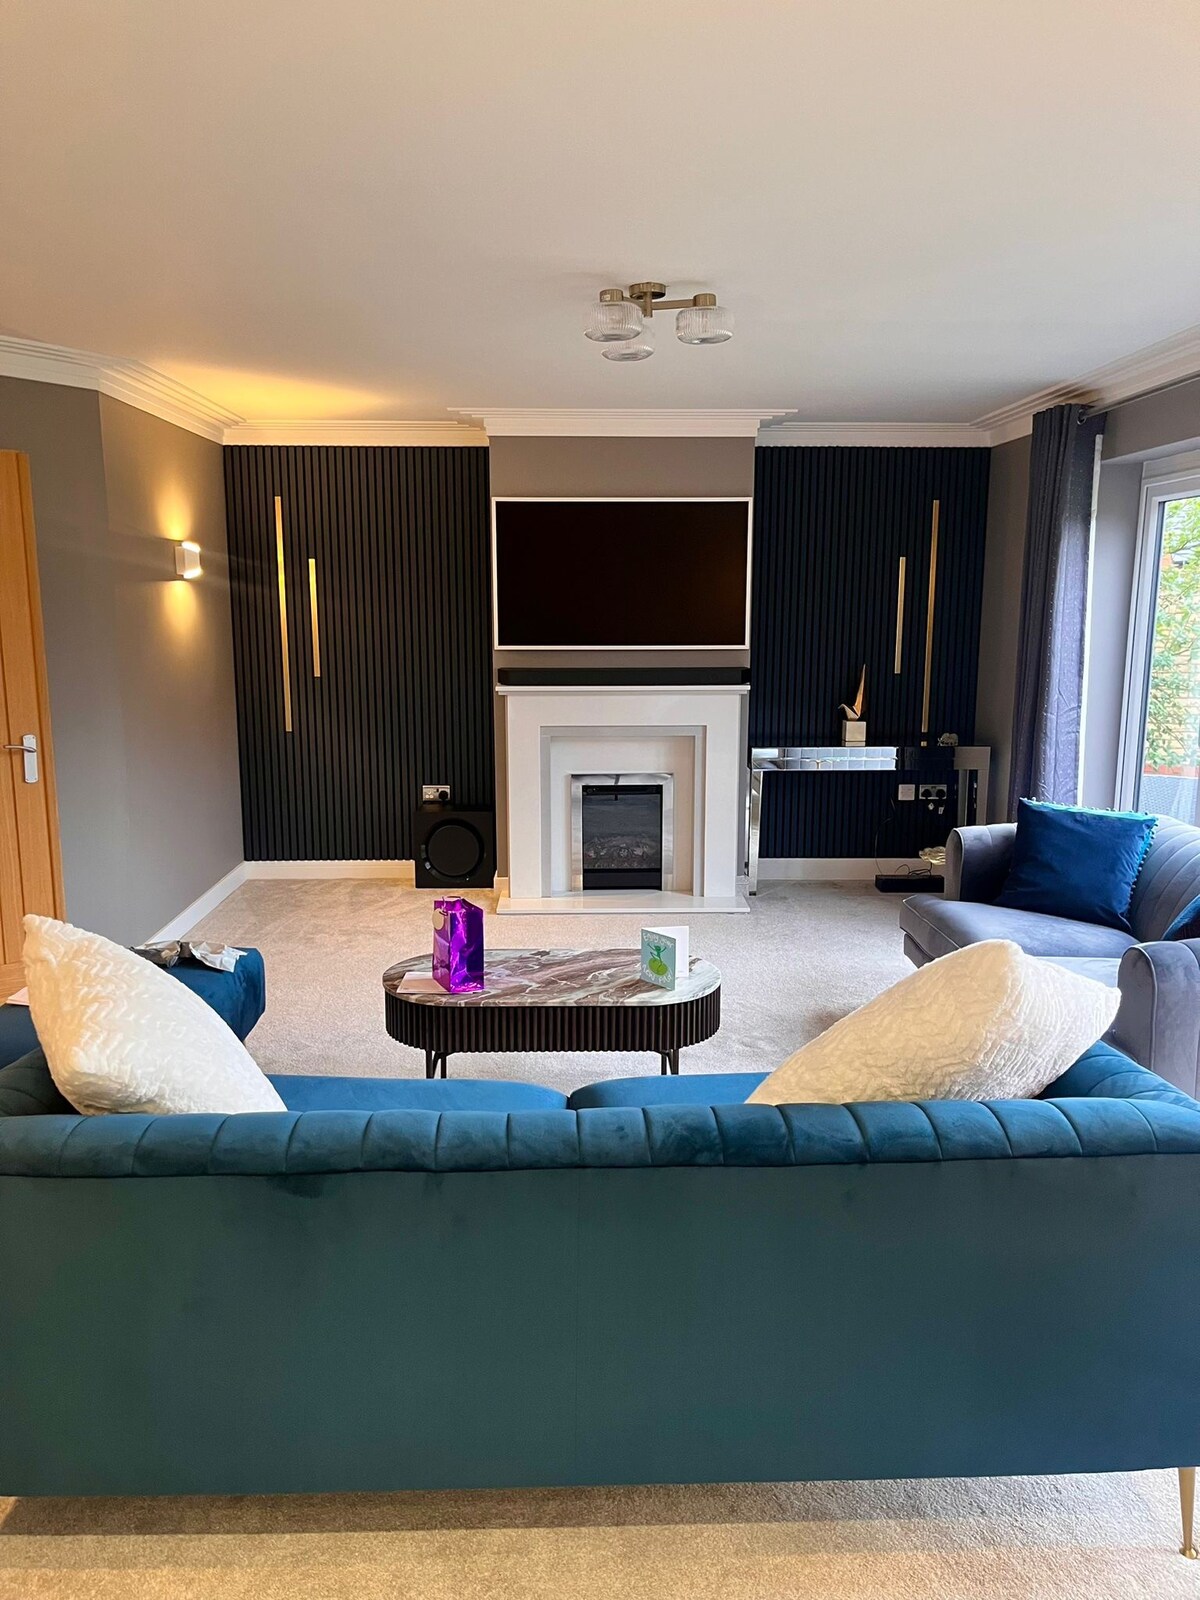 En-suite superking executive room in luxury home